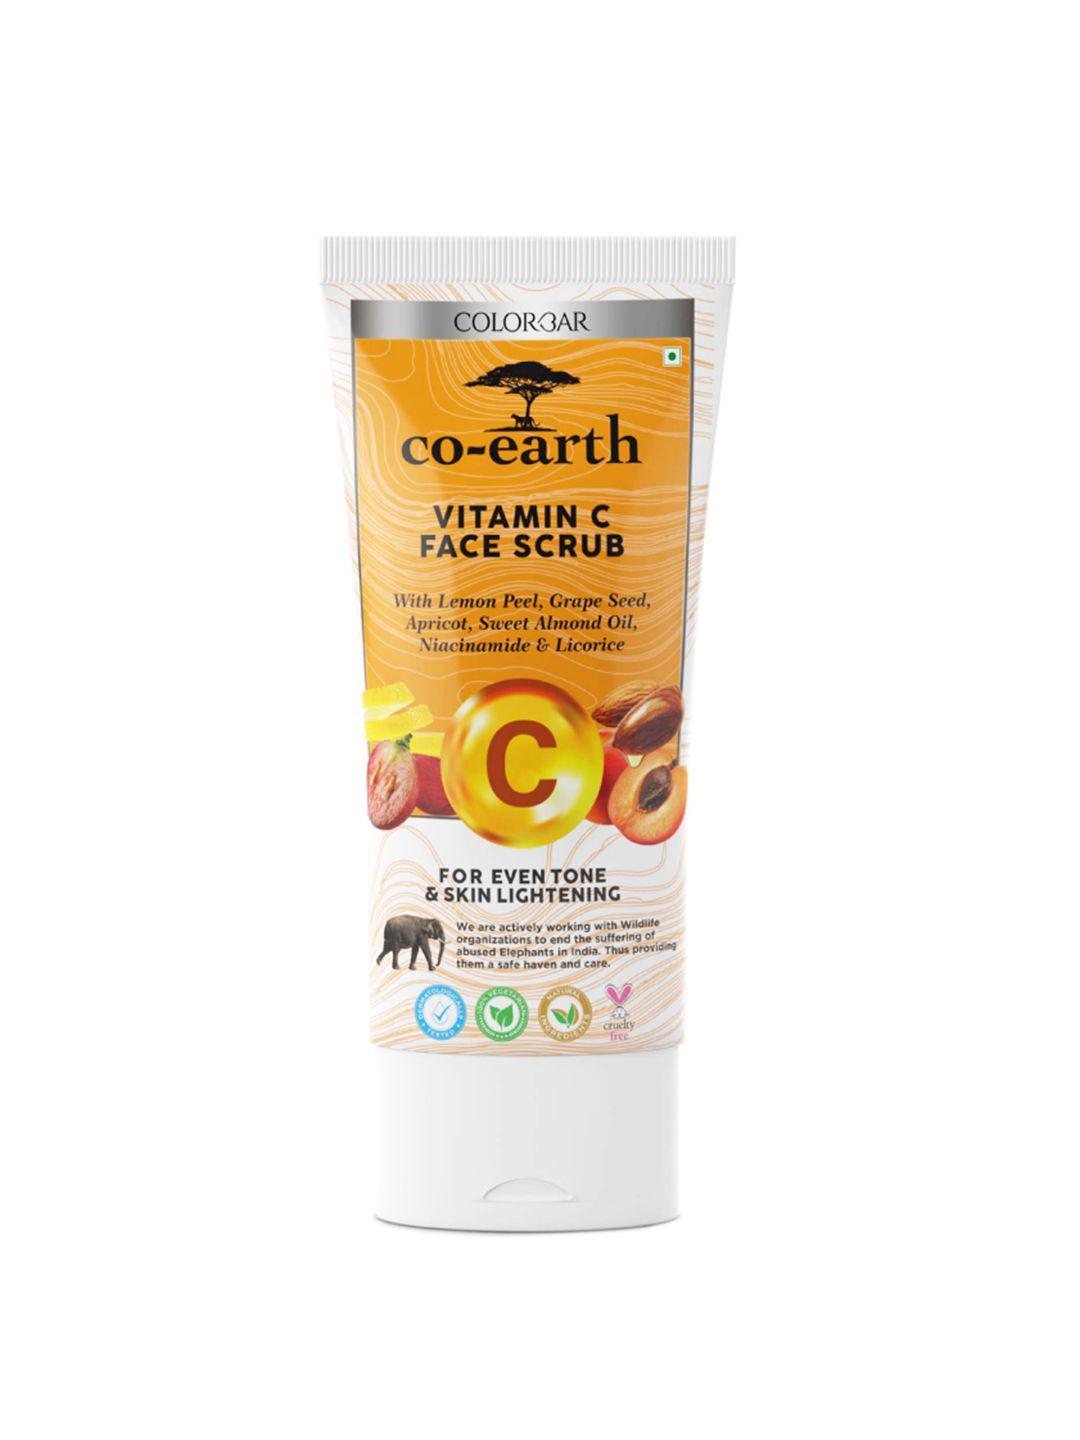 colorbar co-earth vitamin c face scrub with lemon peel & grape seed - 100g